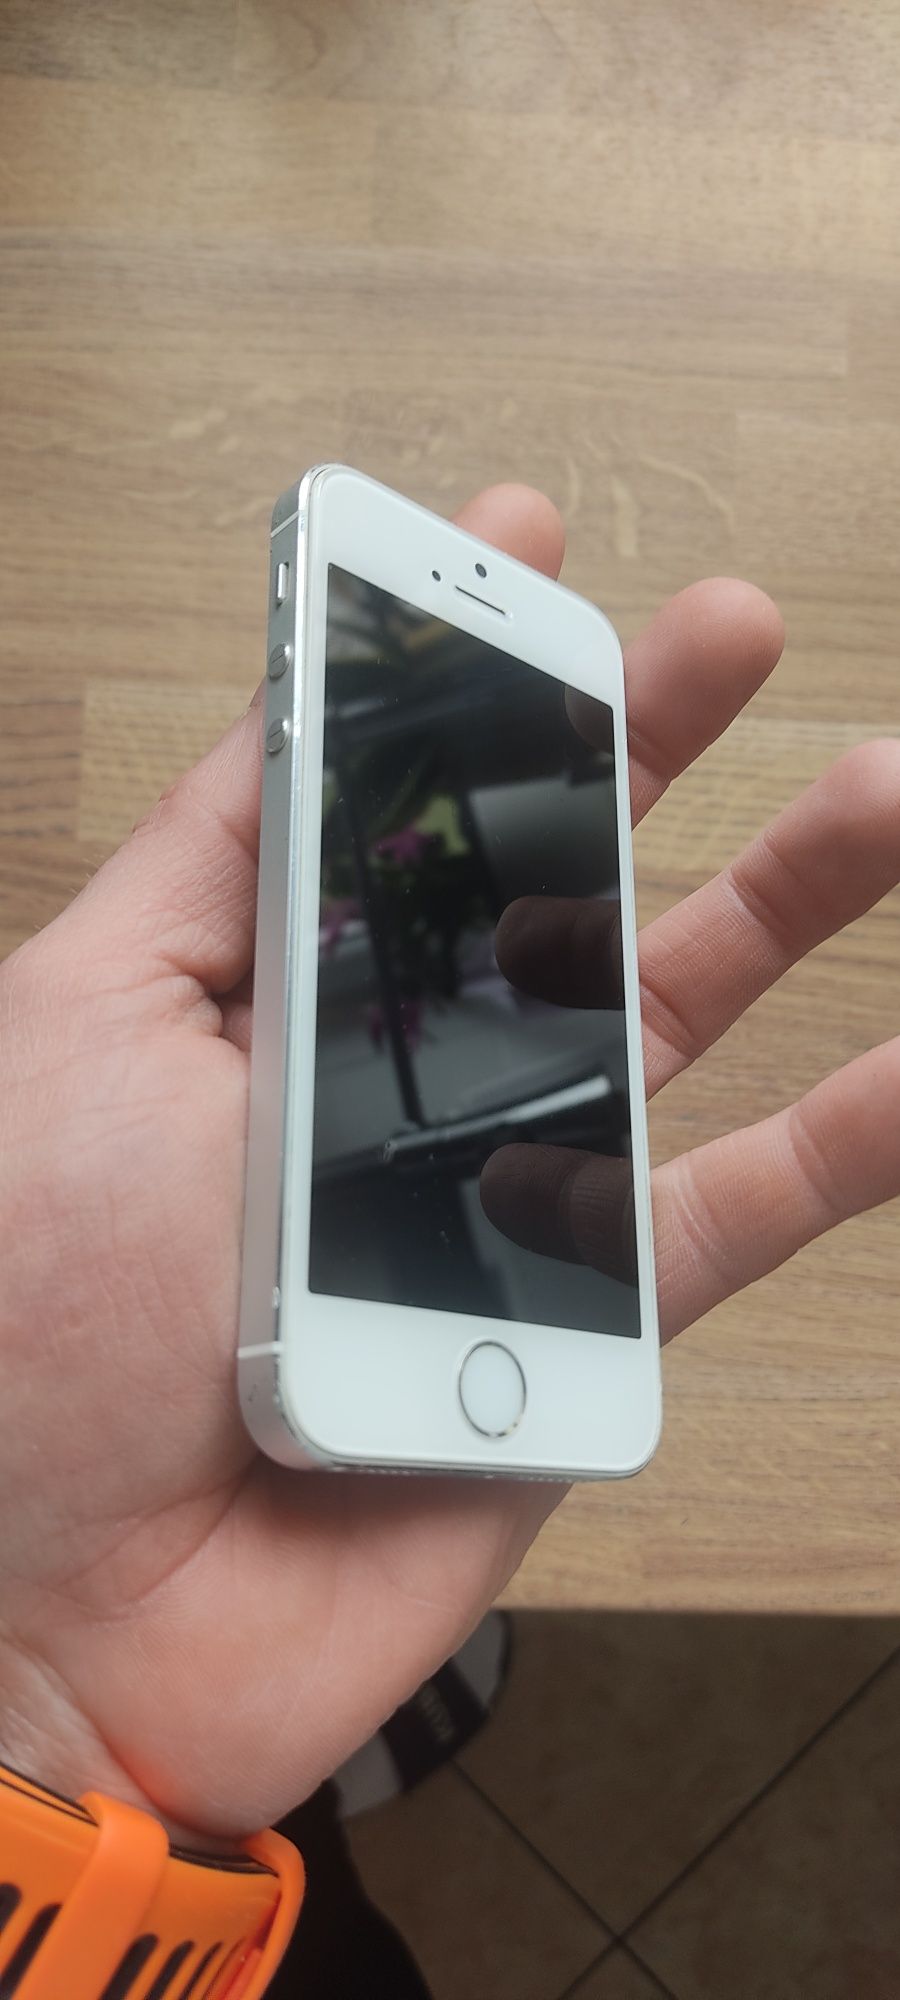 Telefon iPhone 5S biało - srebrny